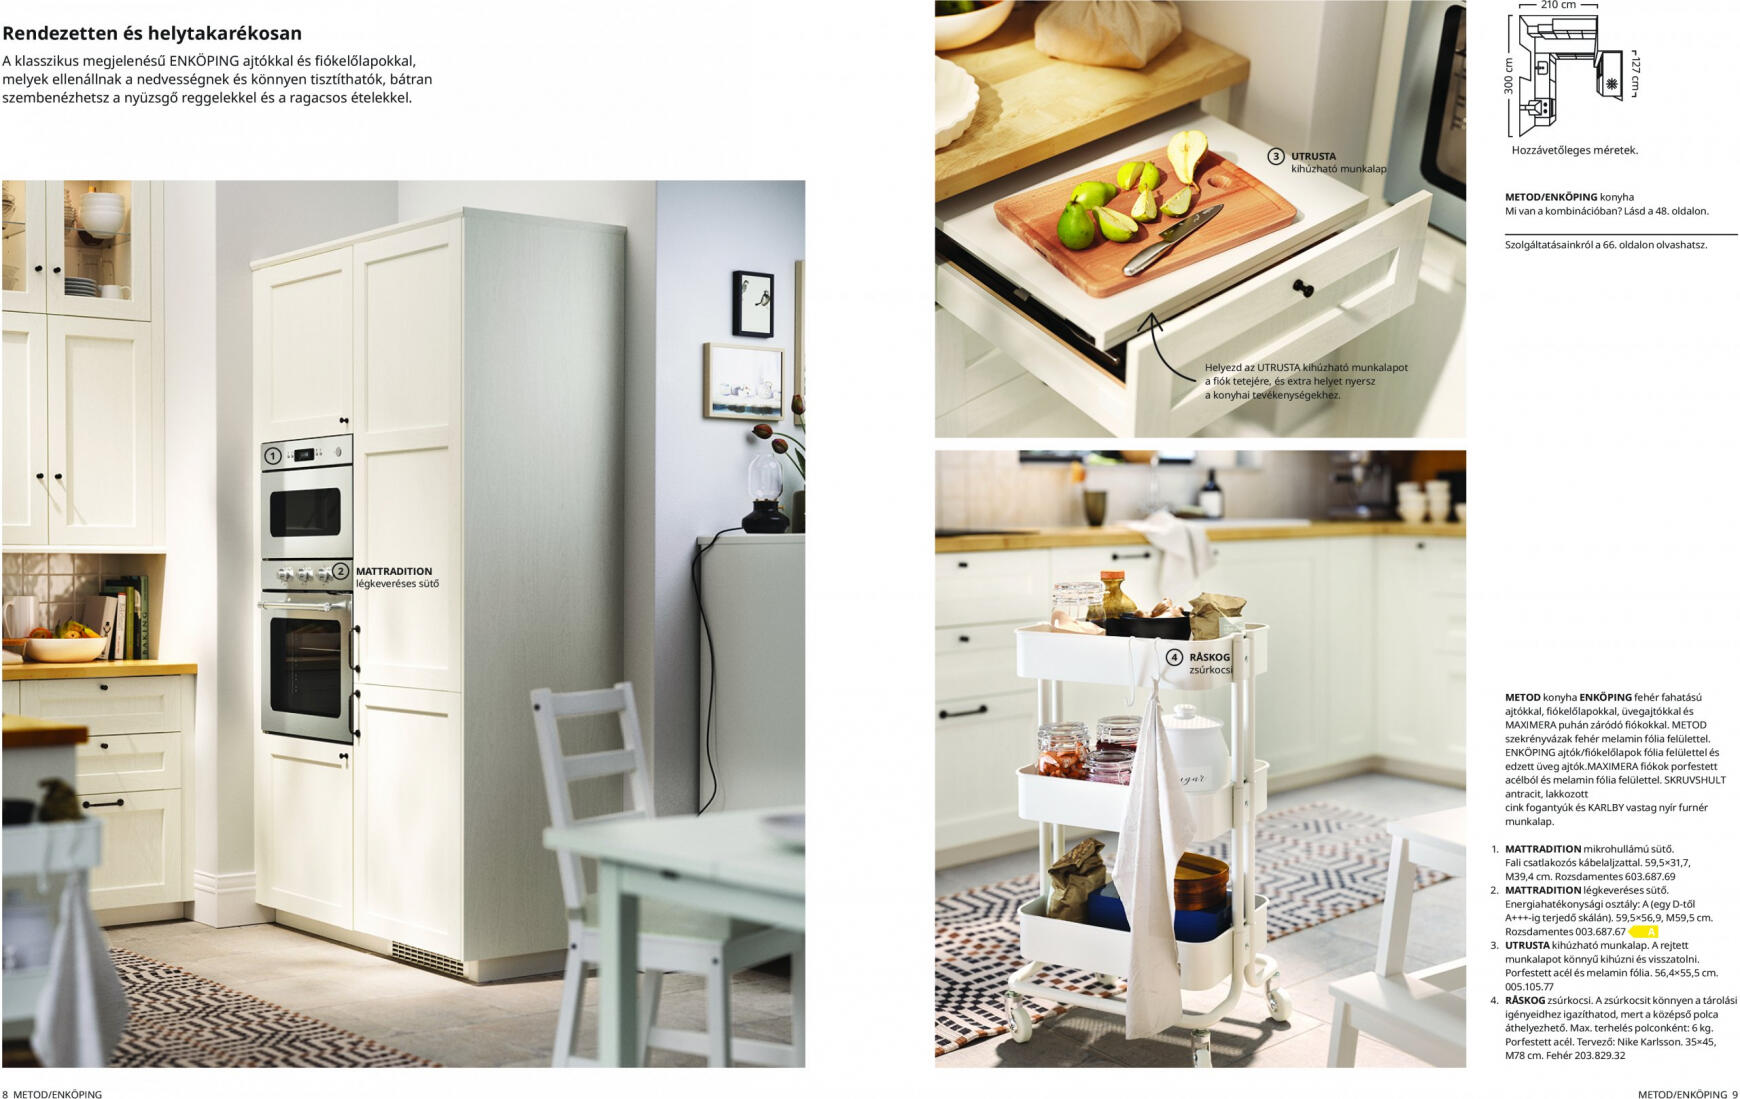 ikea - IKEA újság hétfőtől 08.22. - page: 5